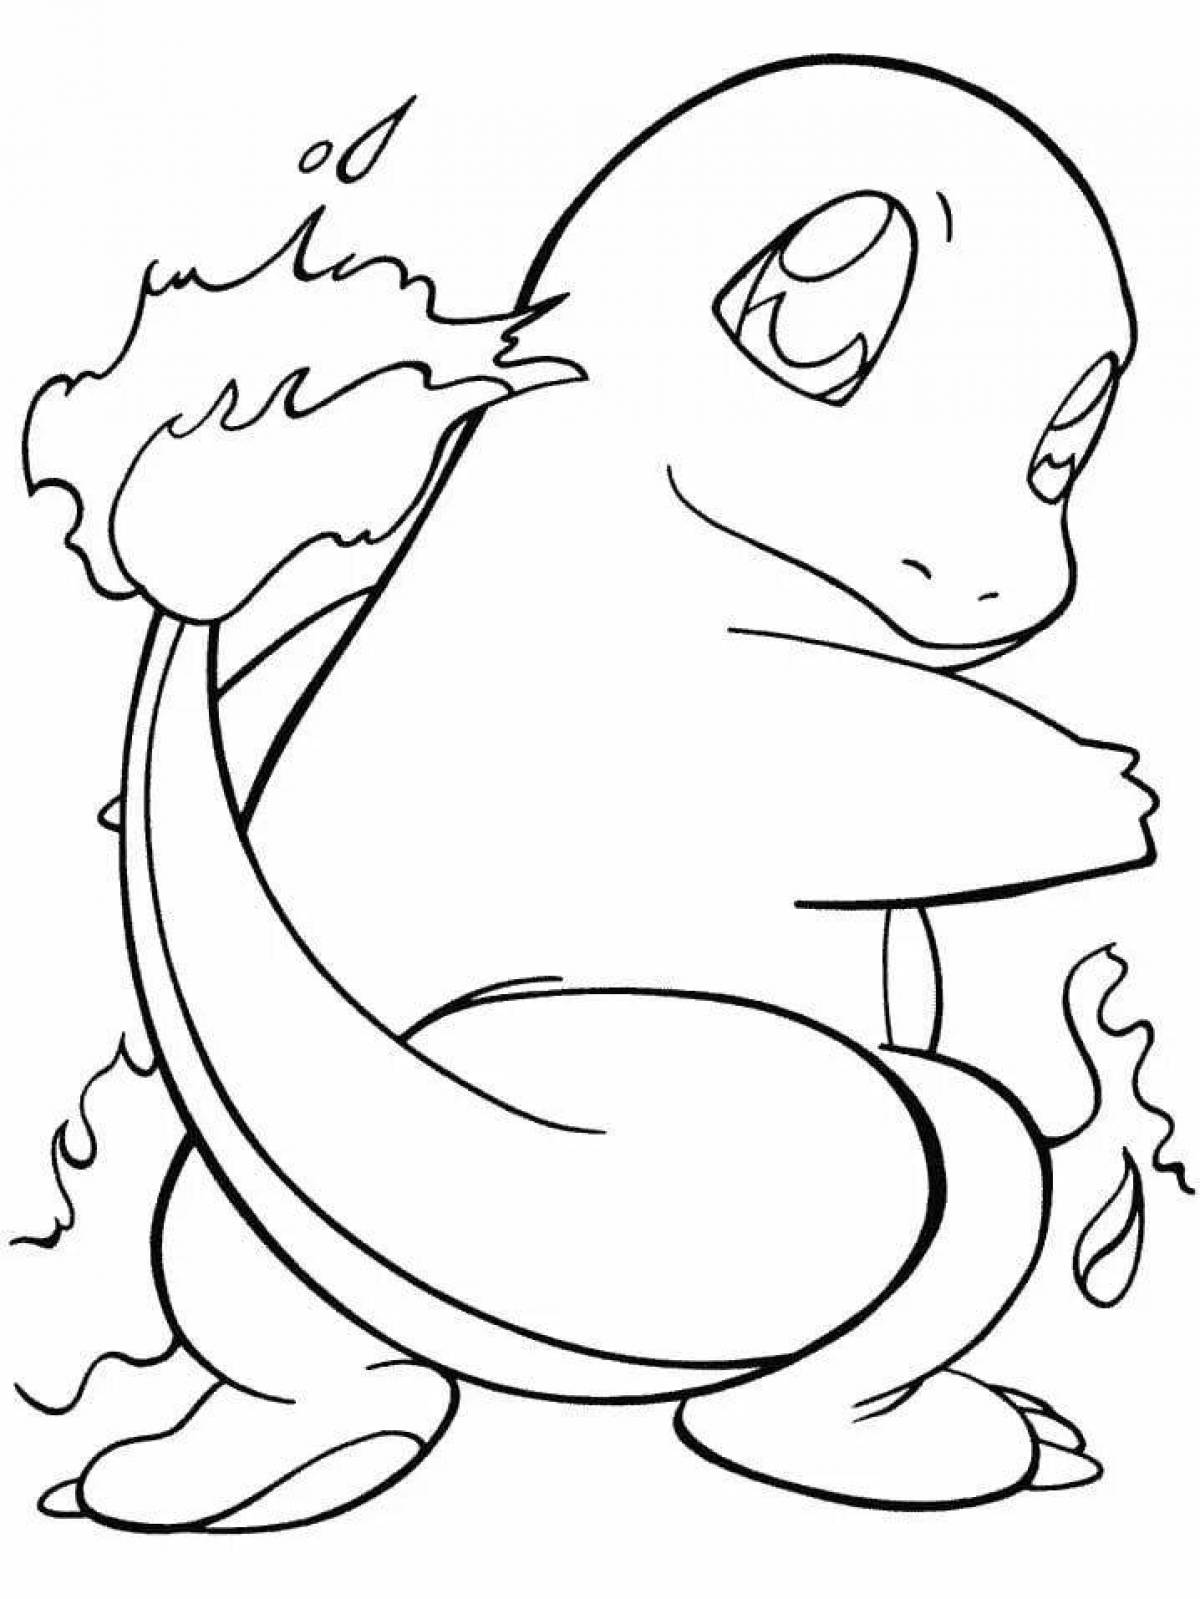 Attractive charmander pokemon coloring page